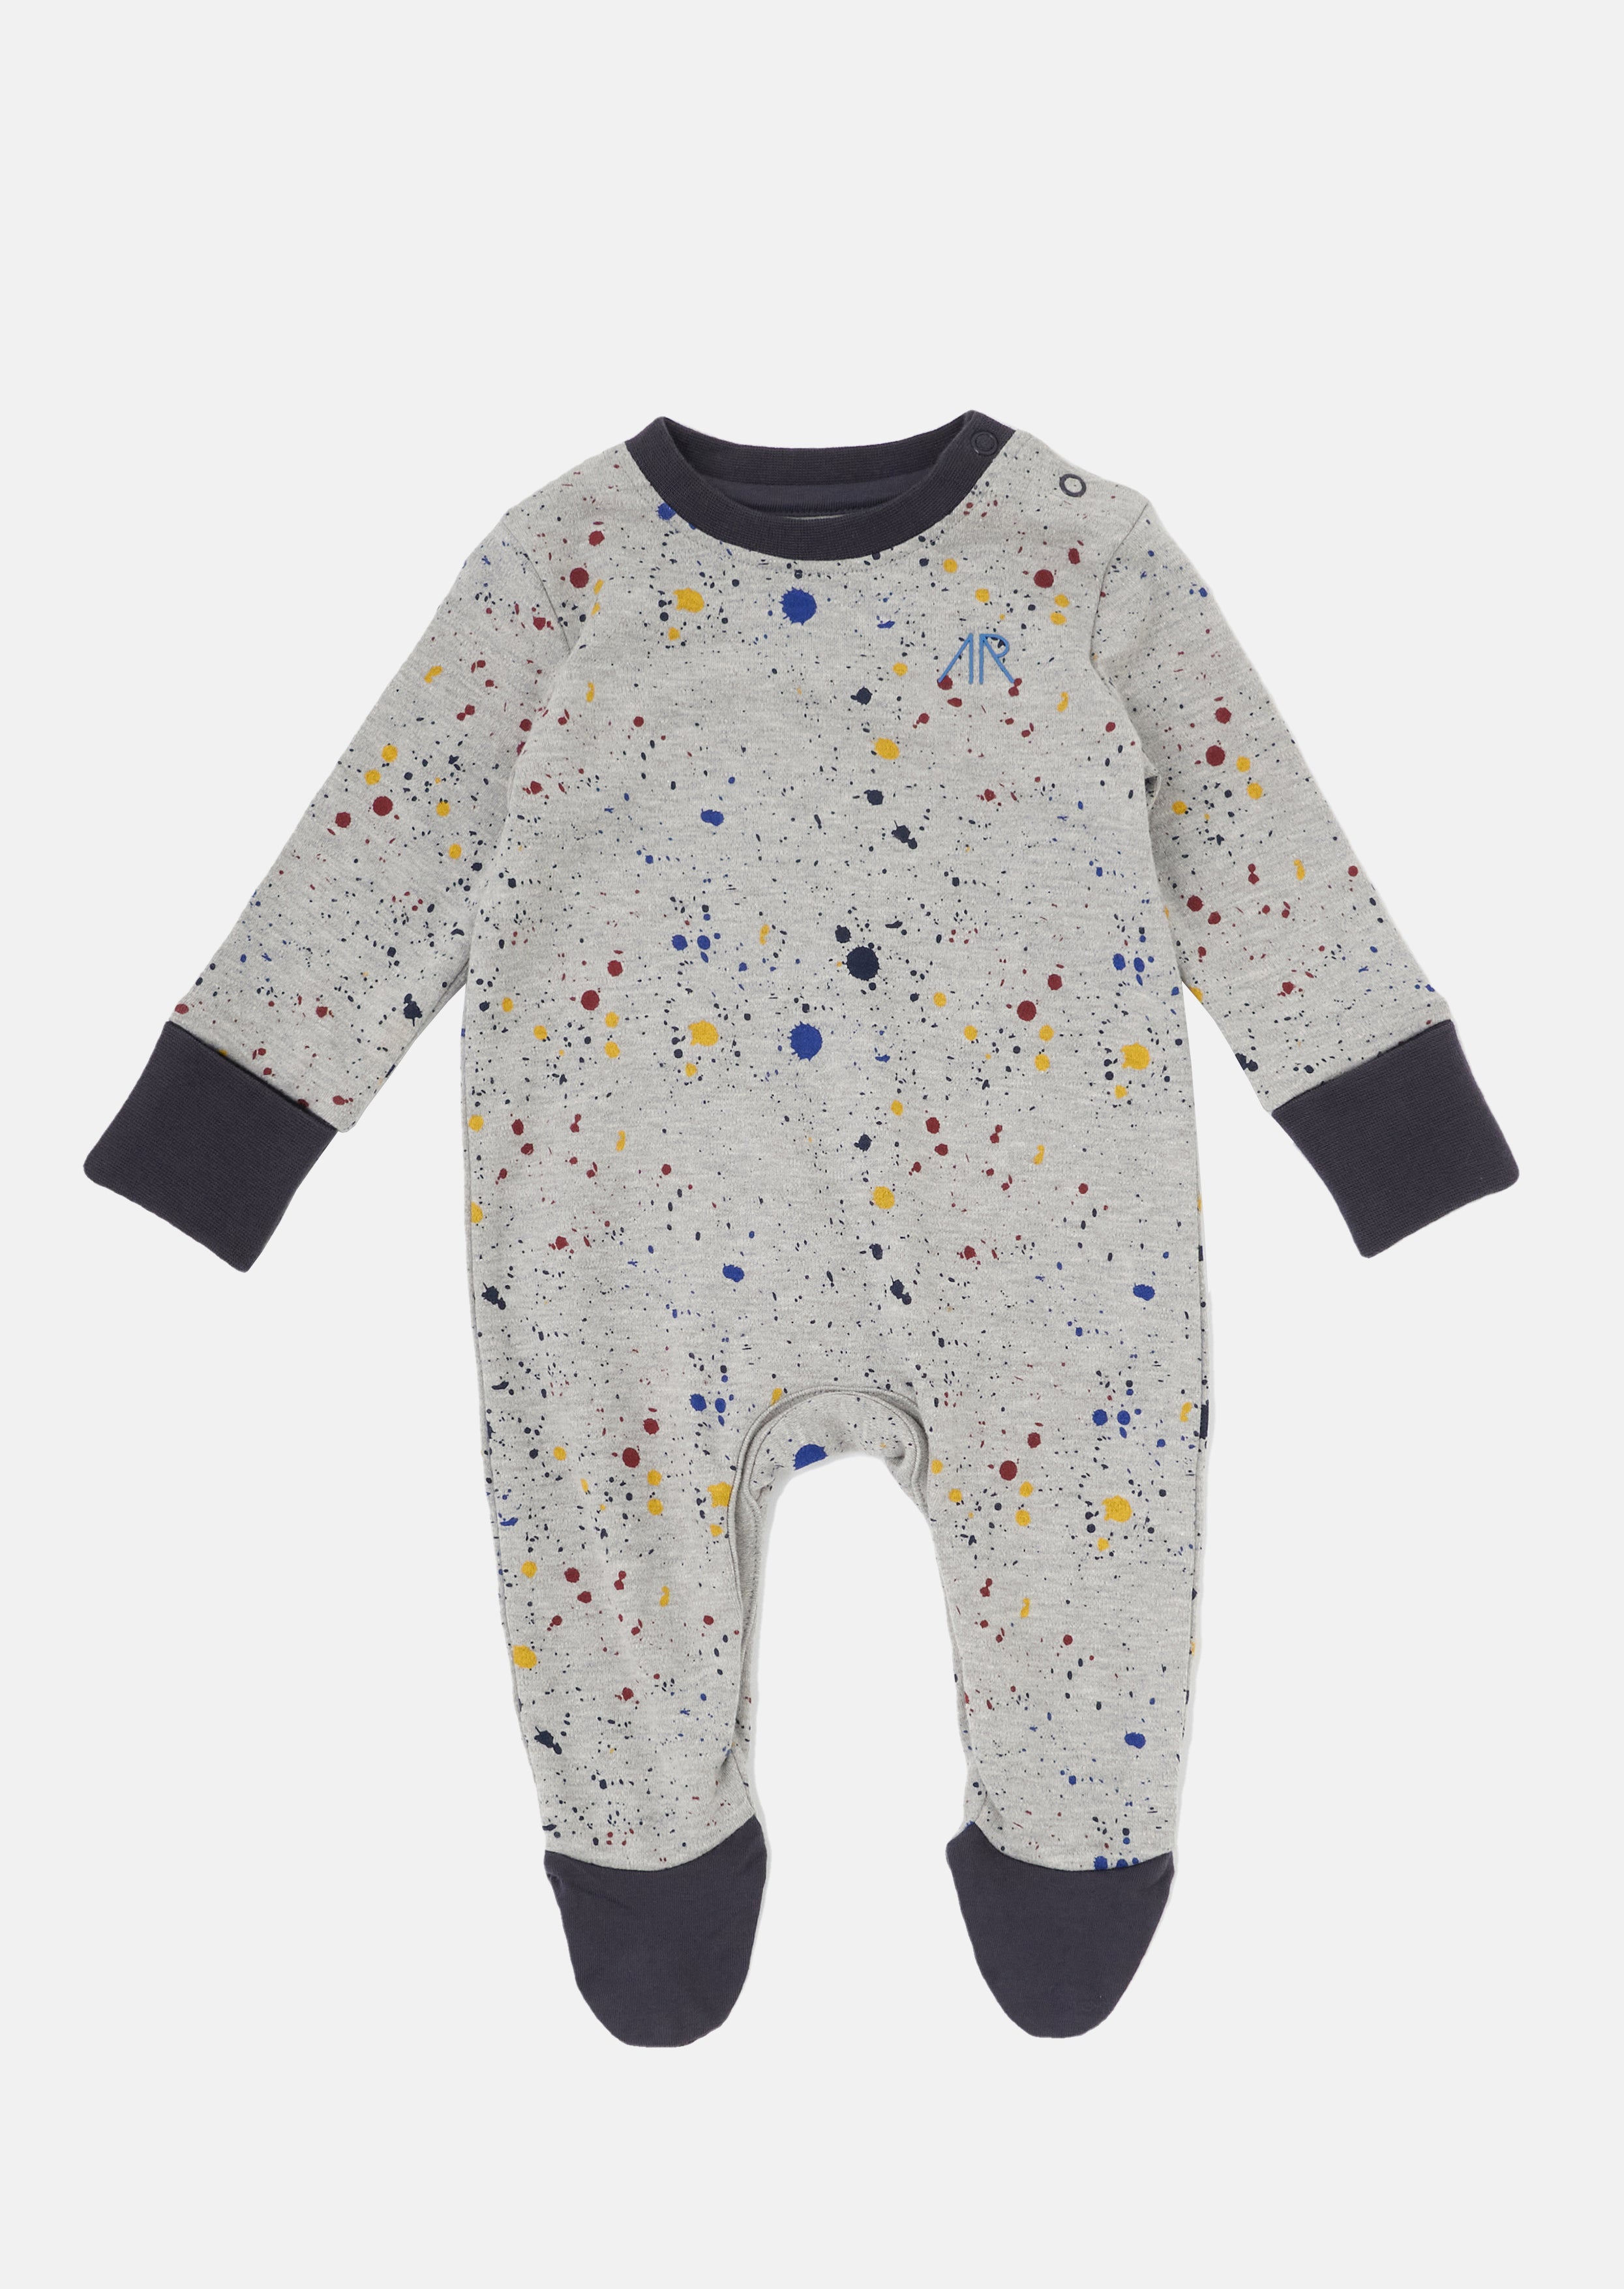 Baby Boy Paint Splat Printed All in One Grey Sleepsuit